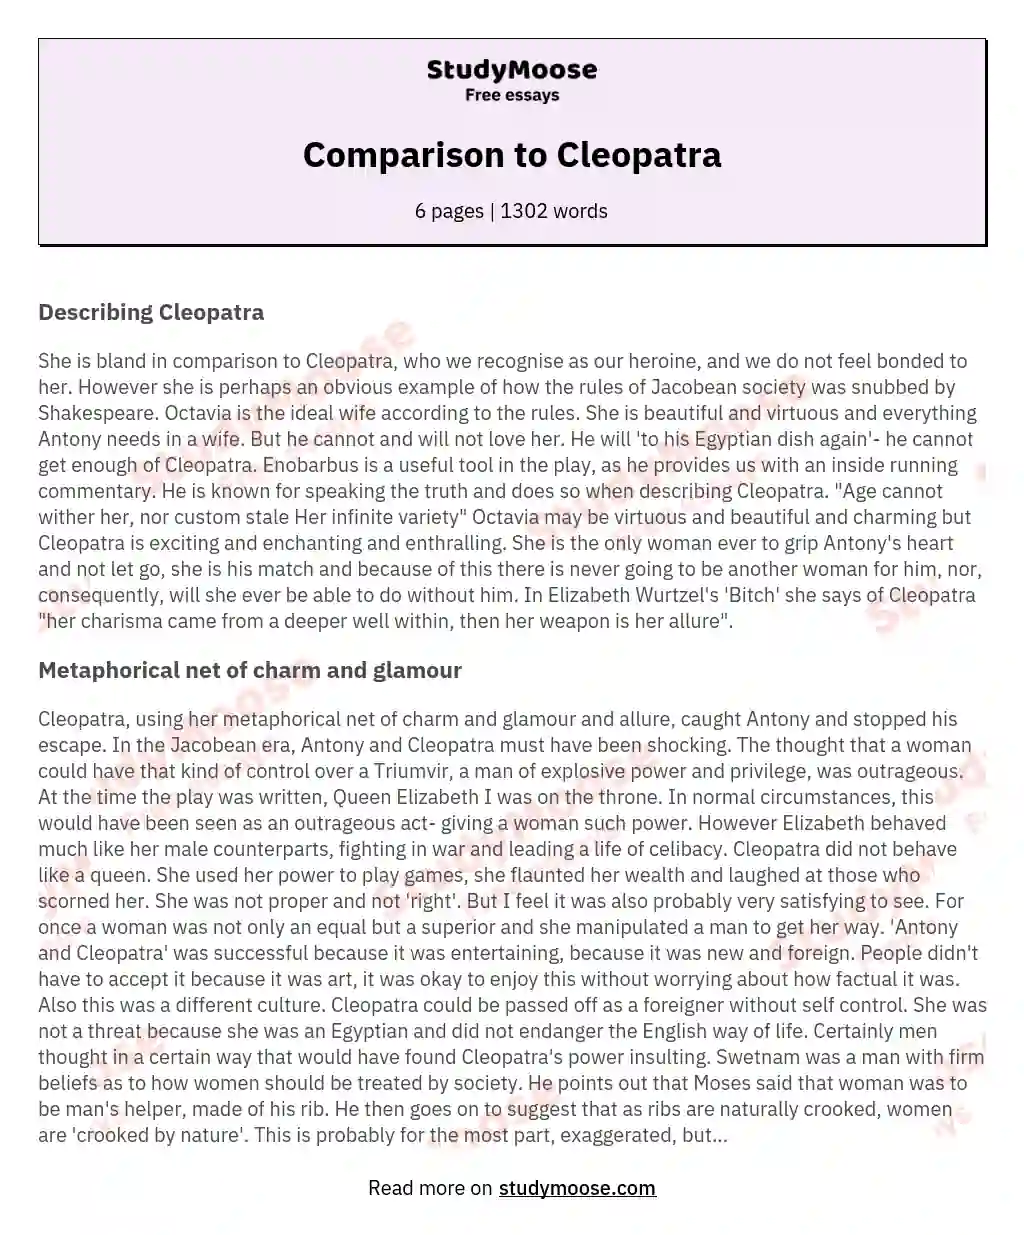 Comparison to Cleopatra